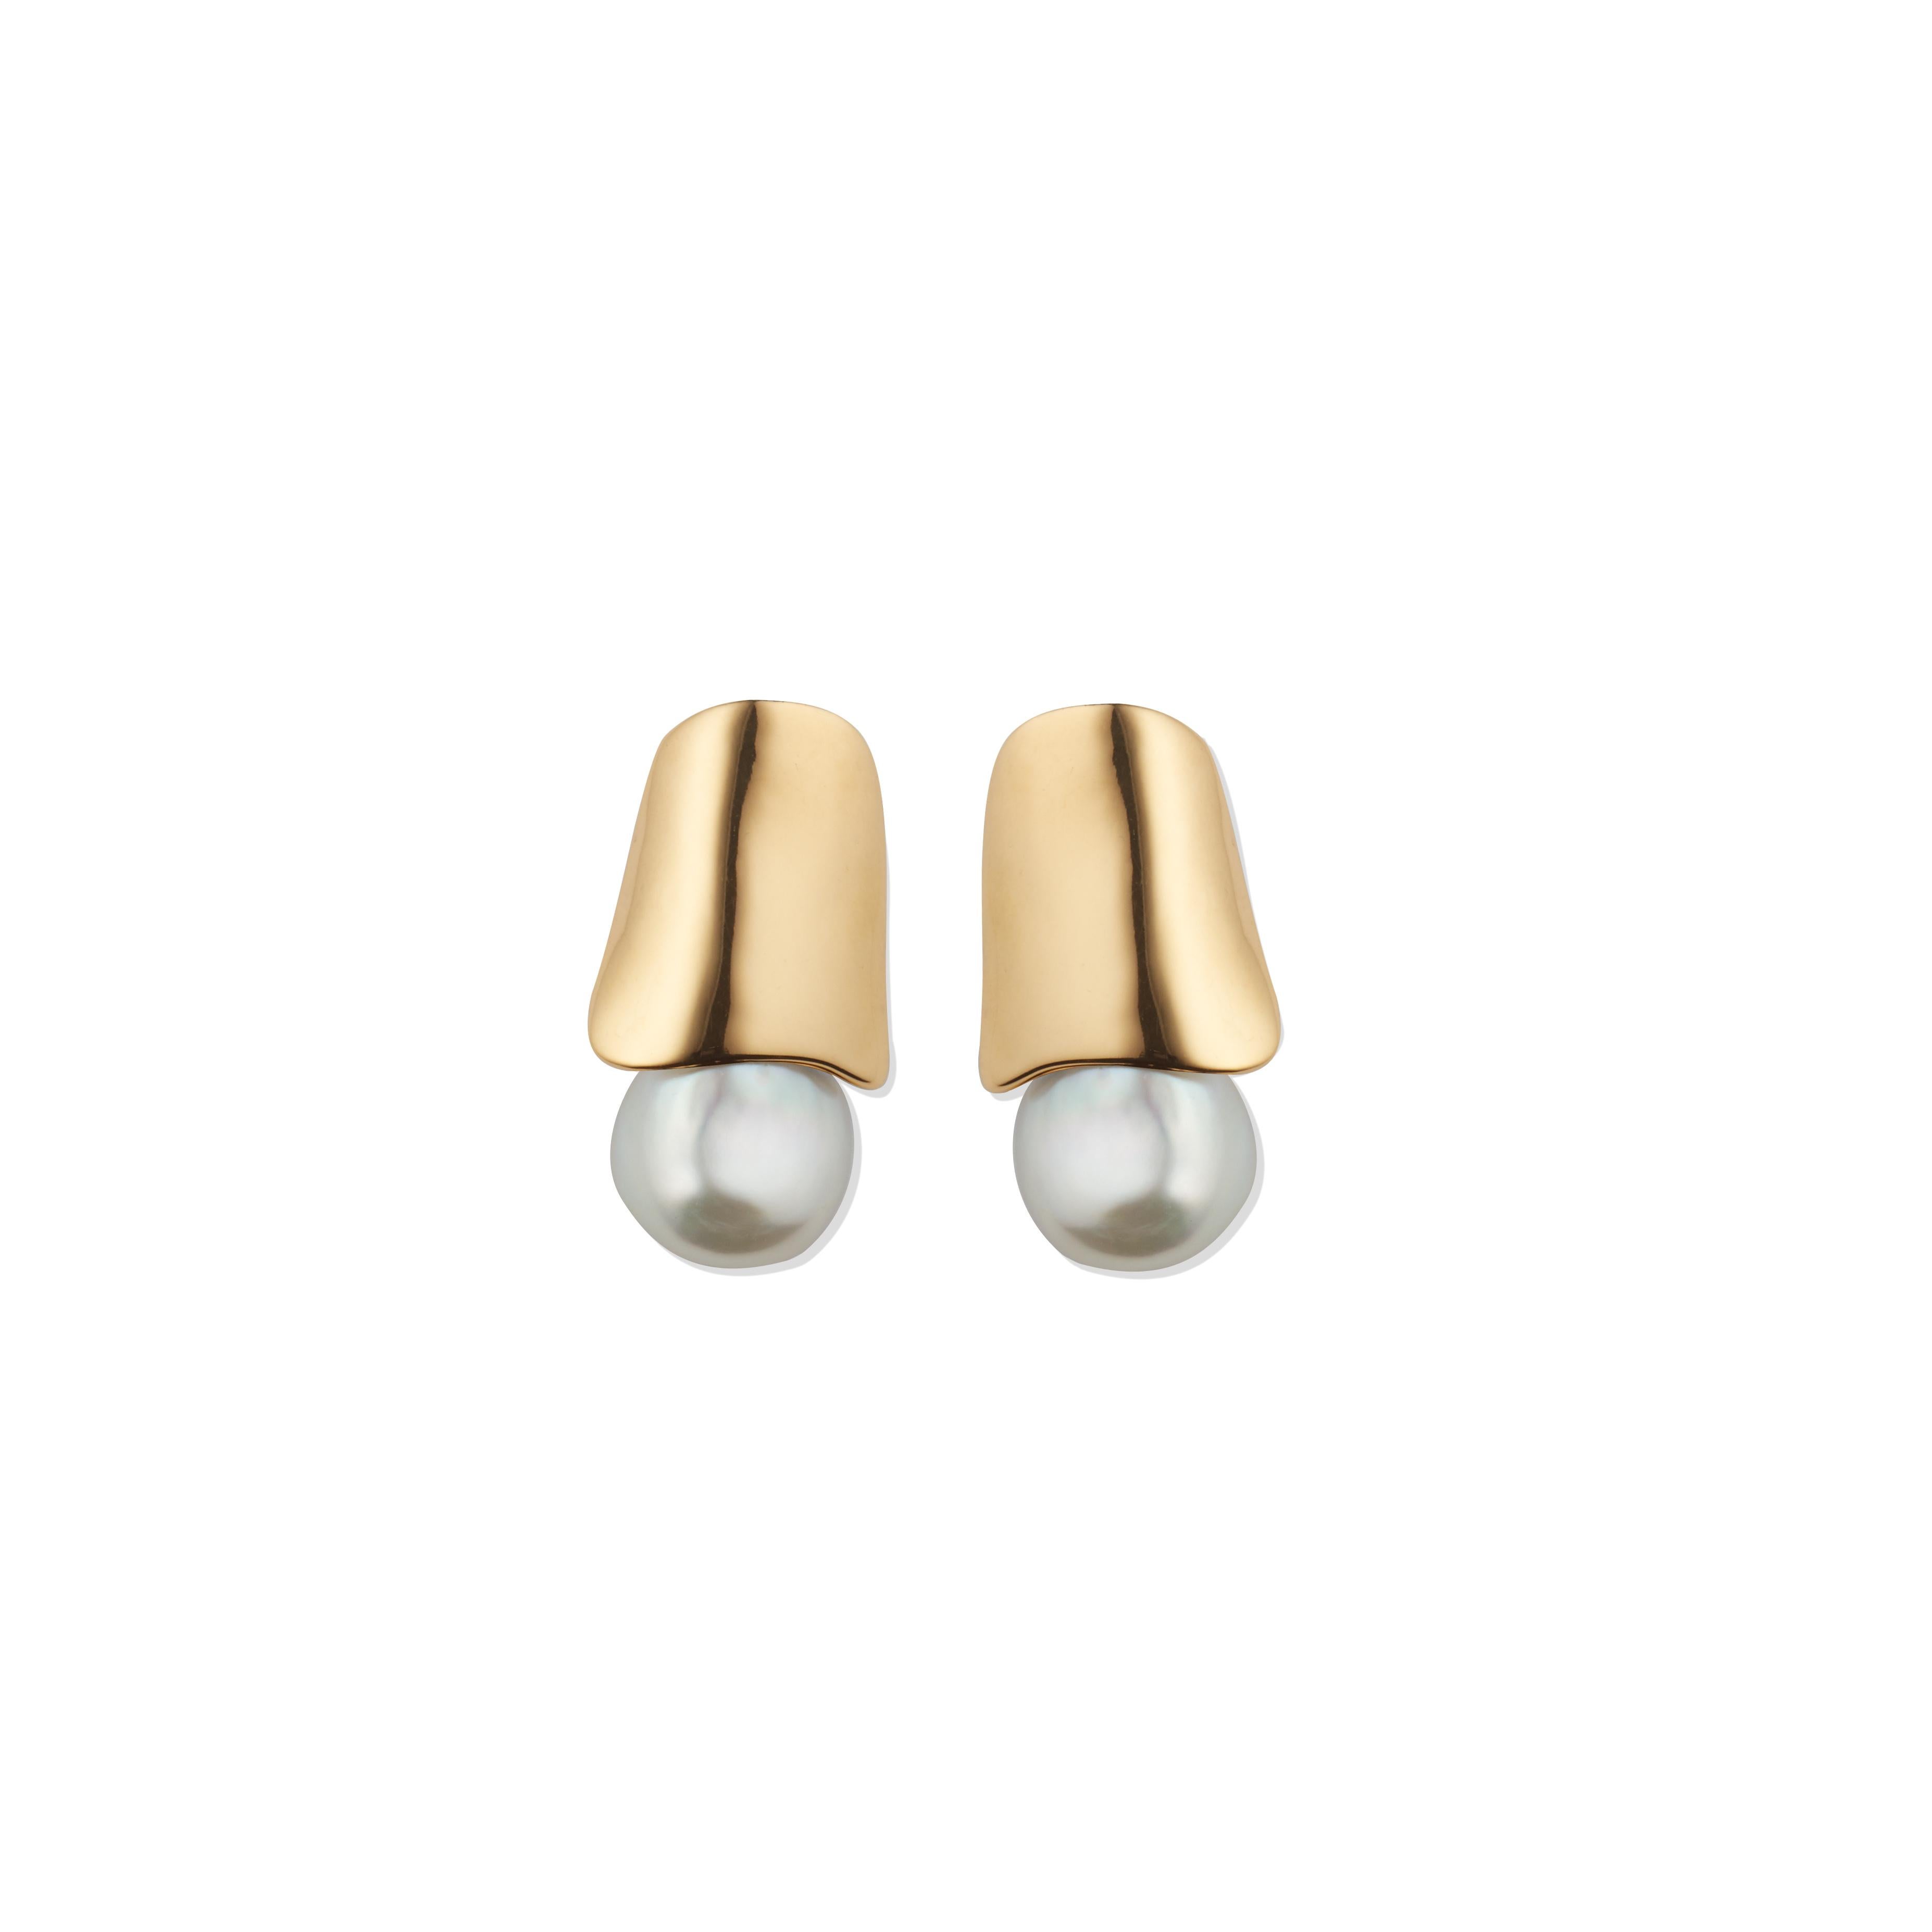 AGMES Sterling Silver Drop Stud Earrings with Freshwater Pearls (Perle)